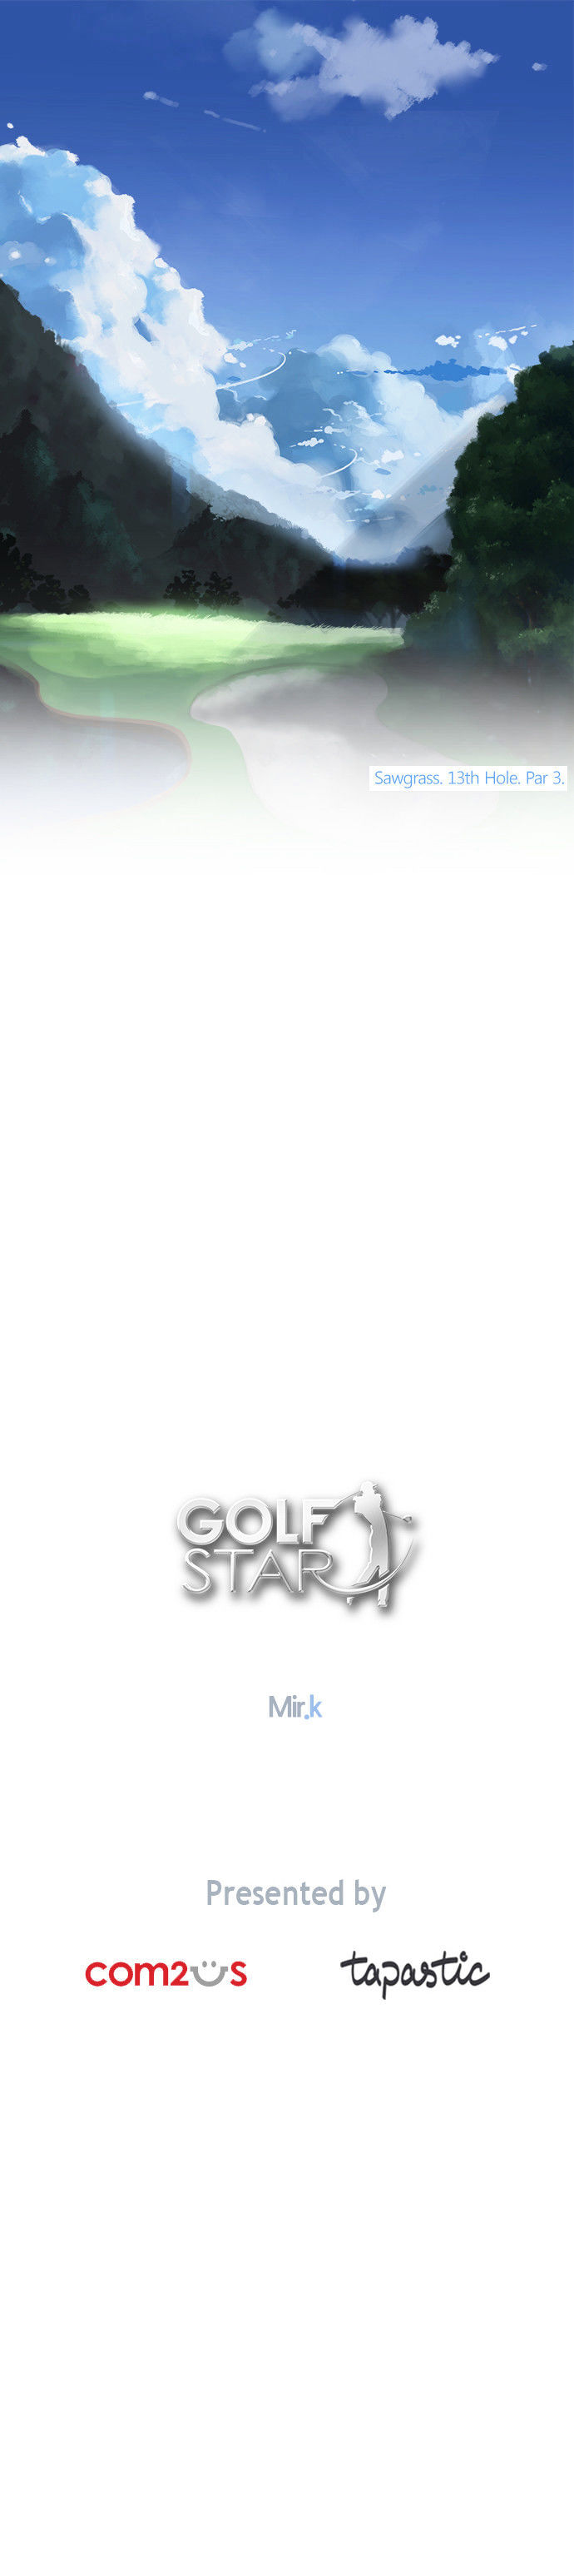 Golf Star - Page 1